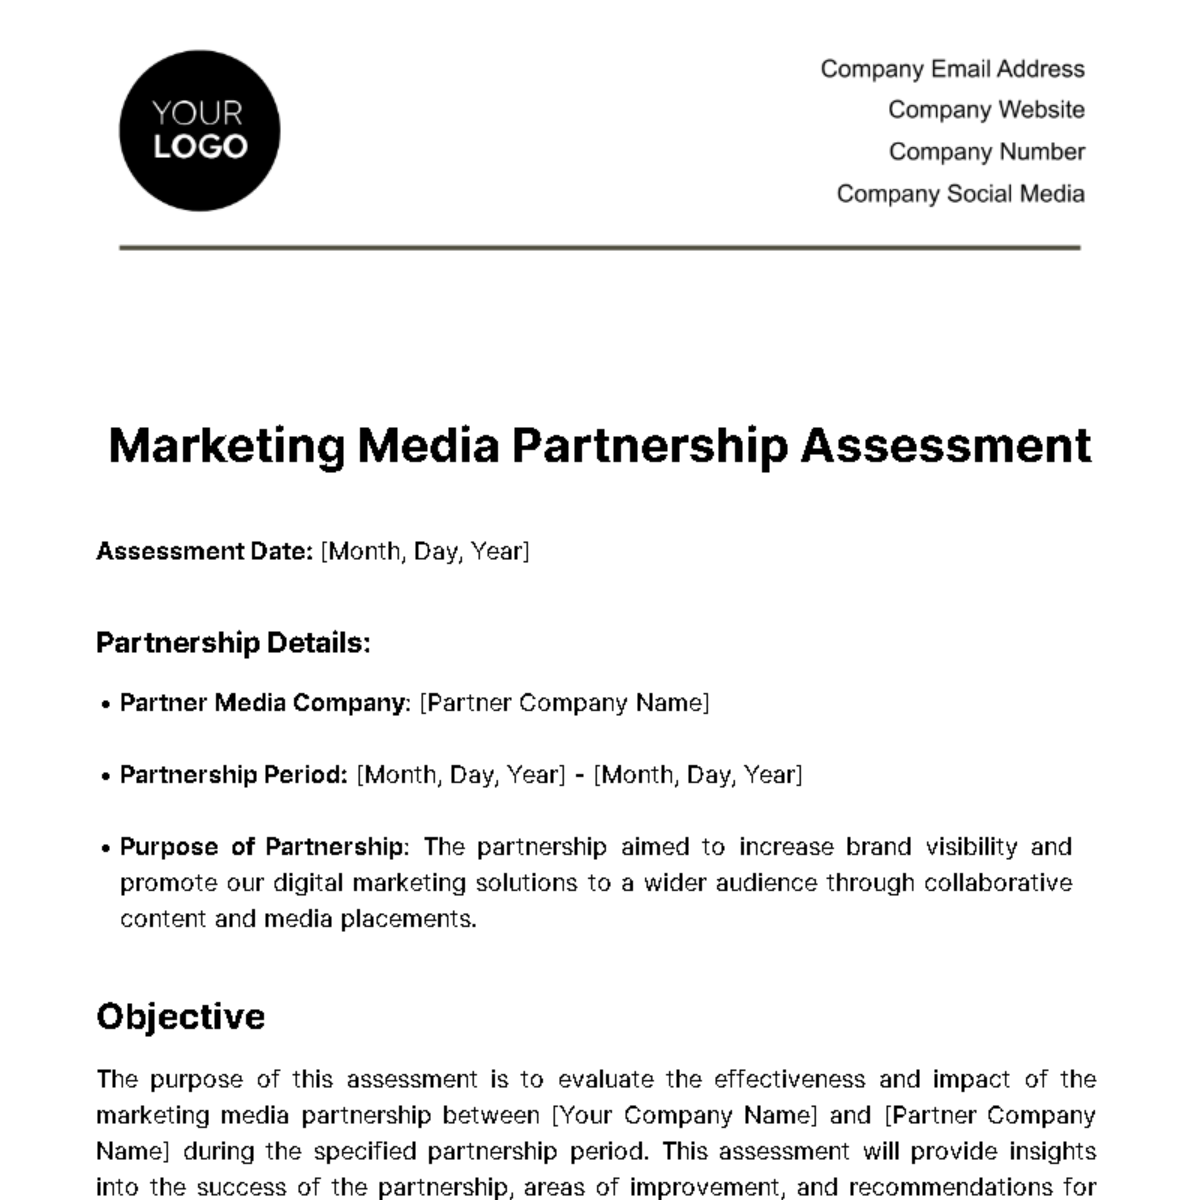 Marketing Media Partnership Assessment Template